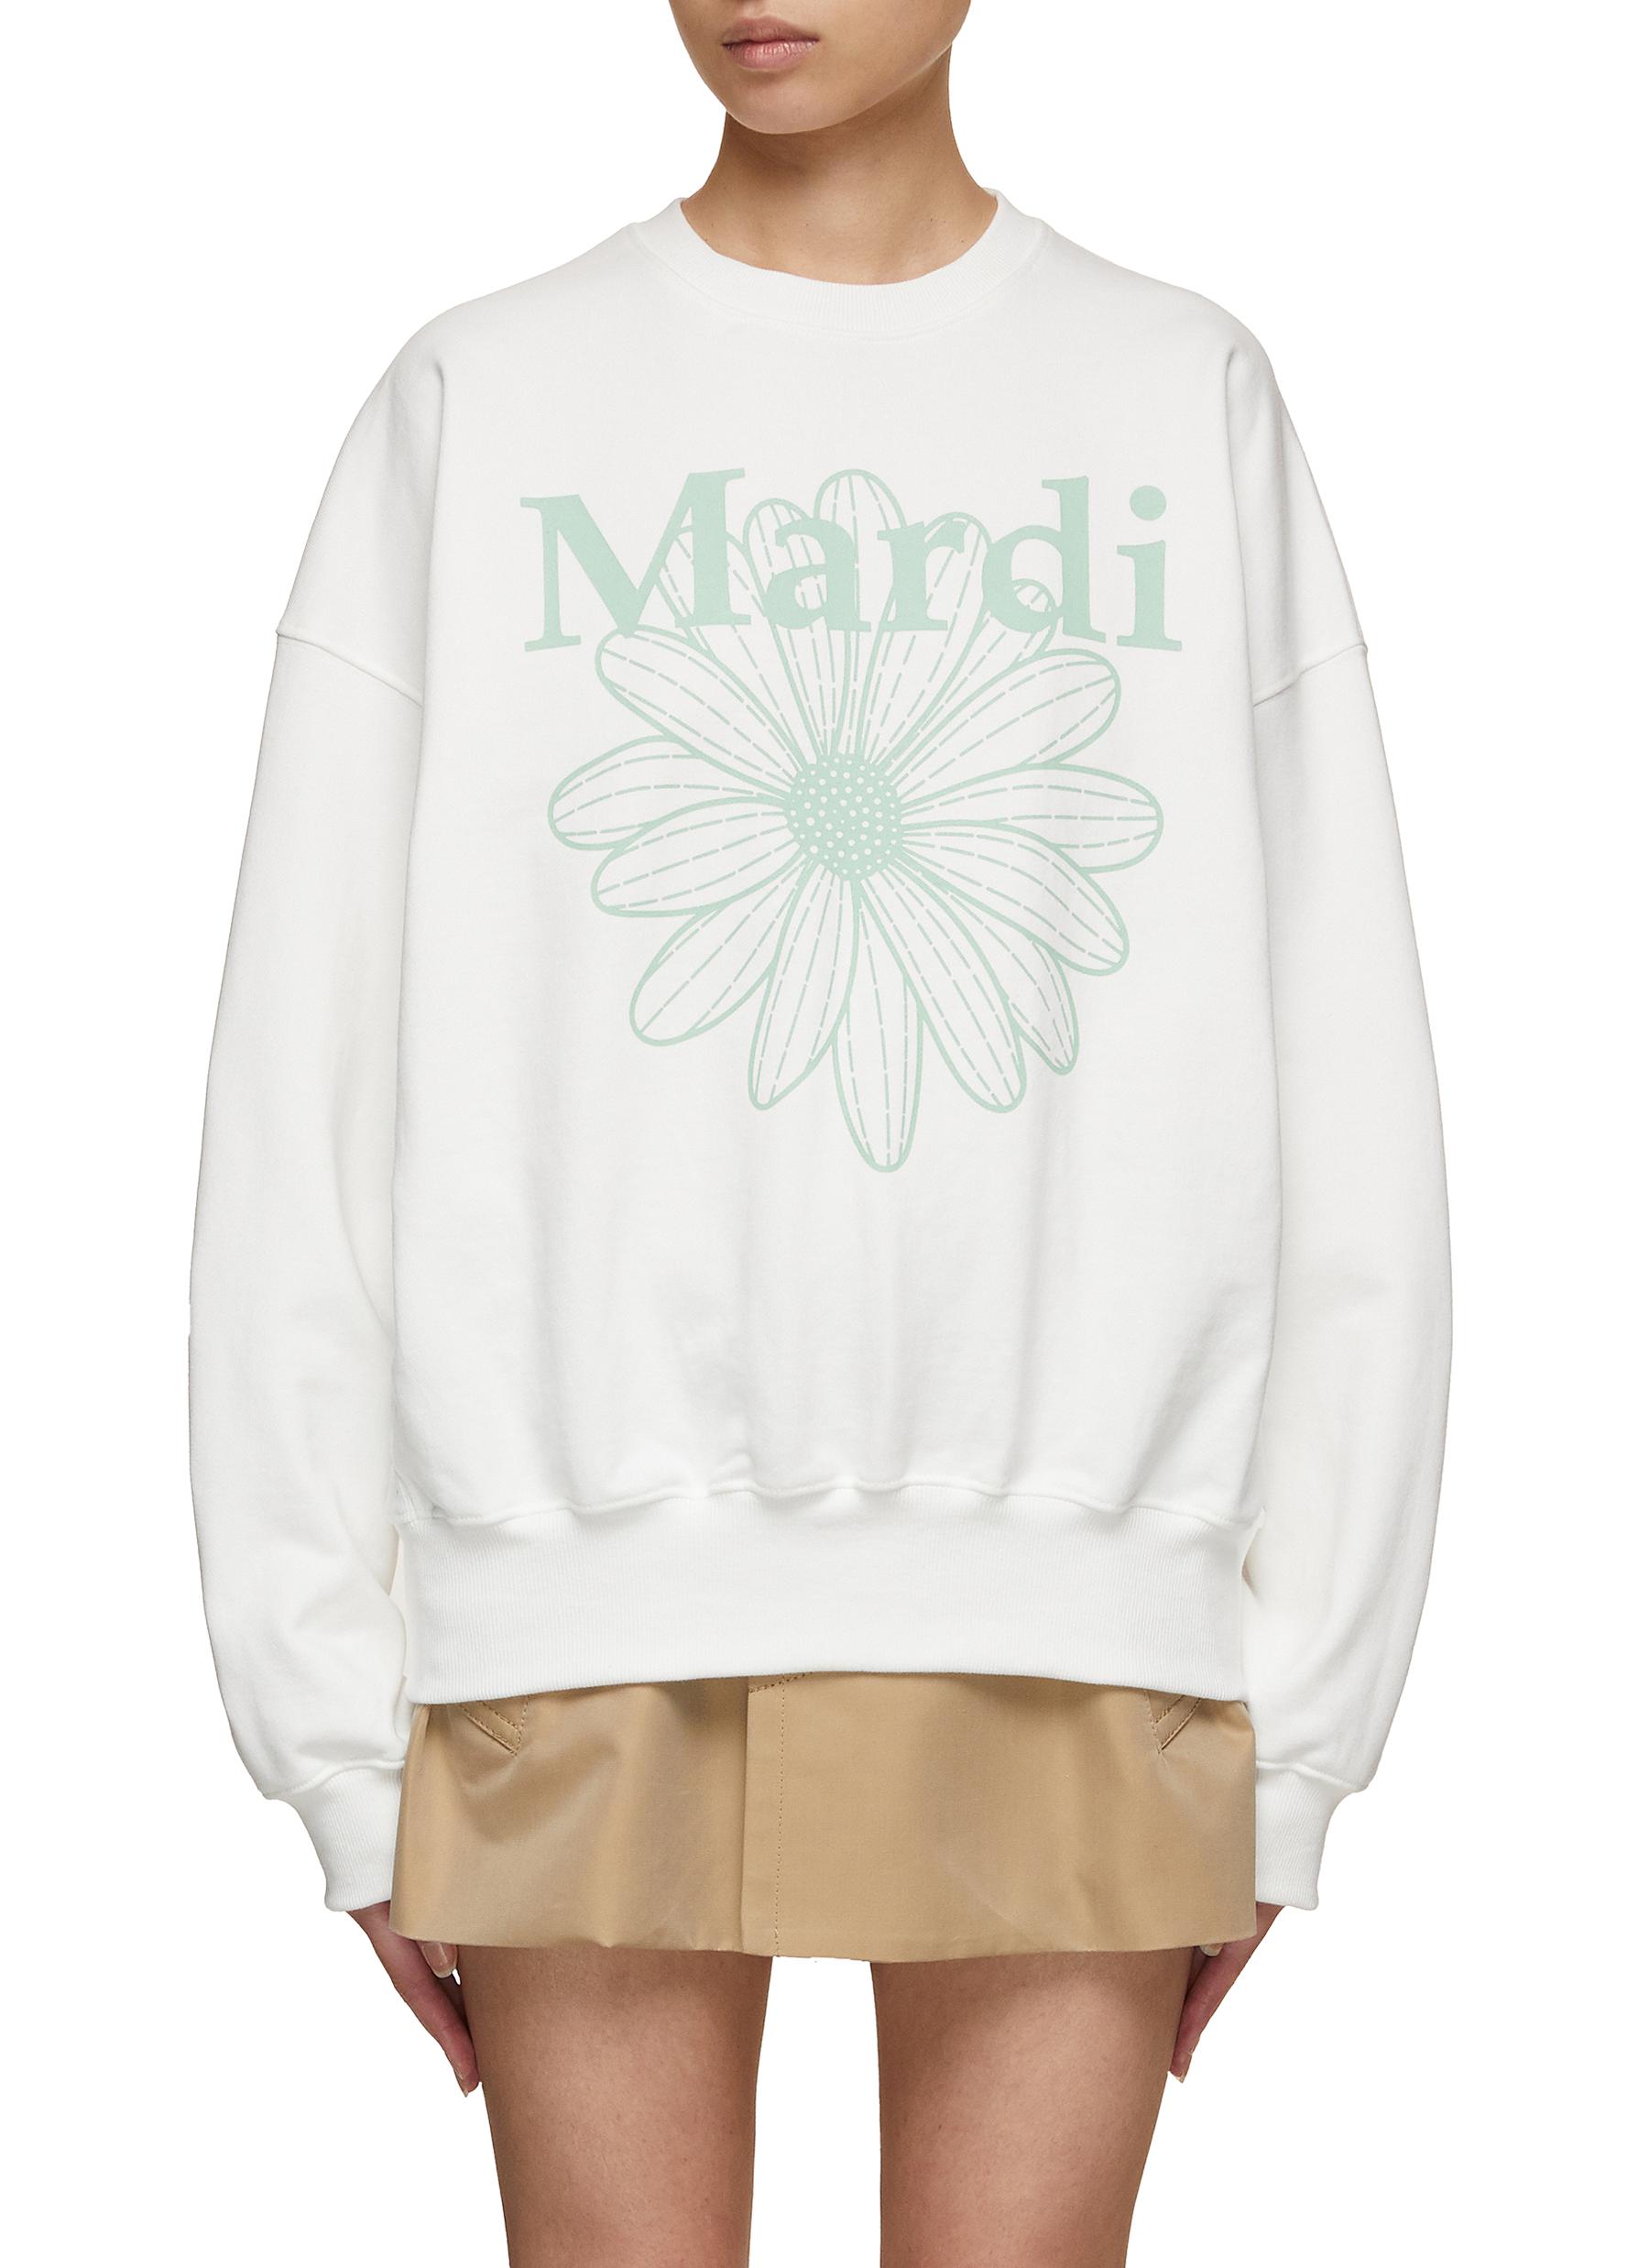 Mardi Flower Cotton Sweatshirt